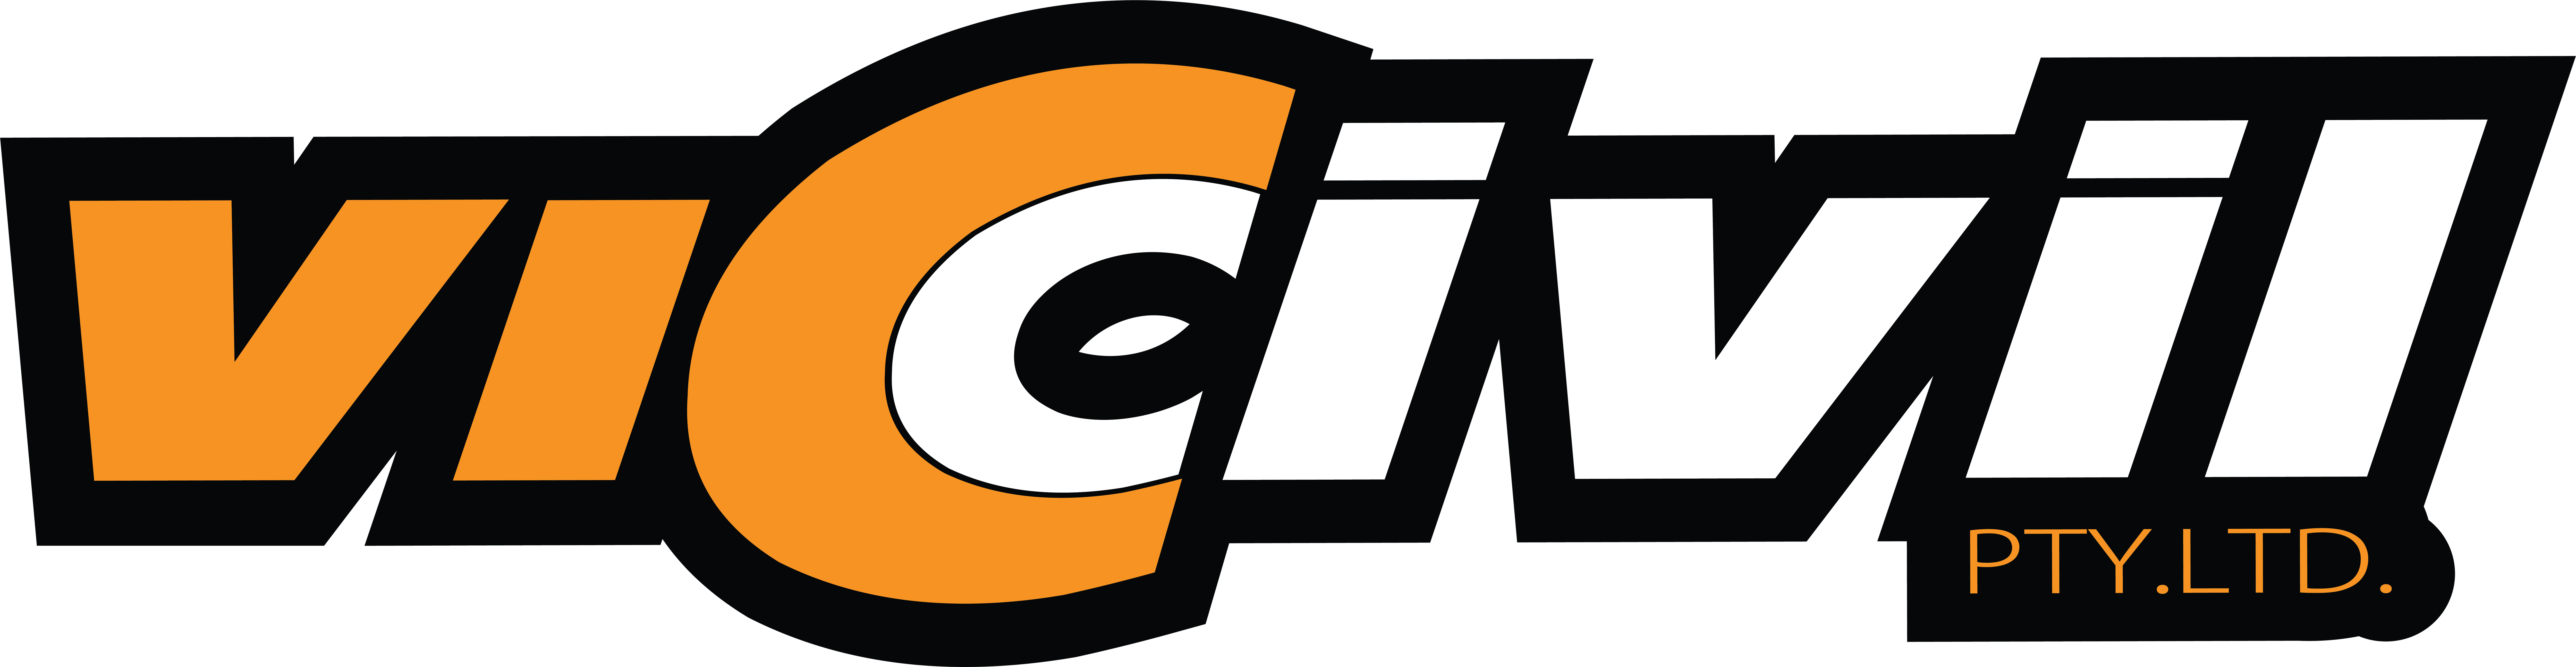 VicCivil_Logo 1.3